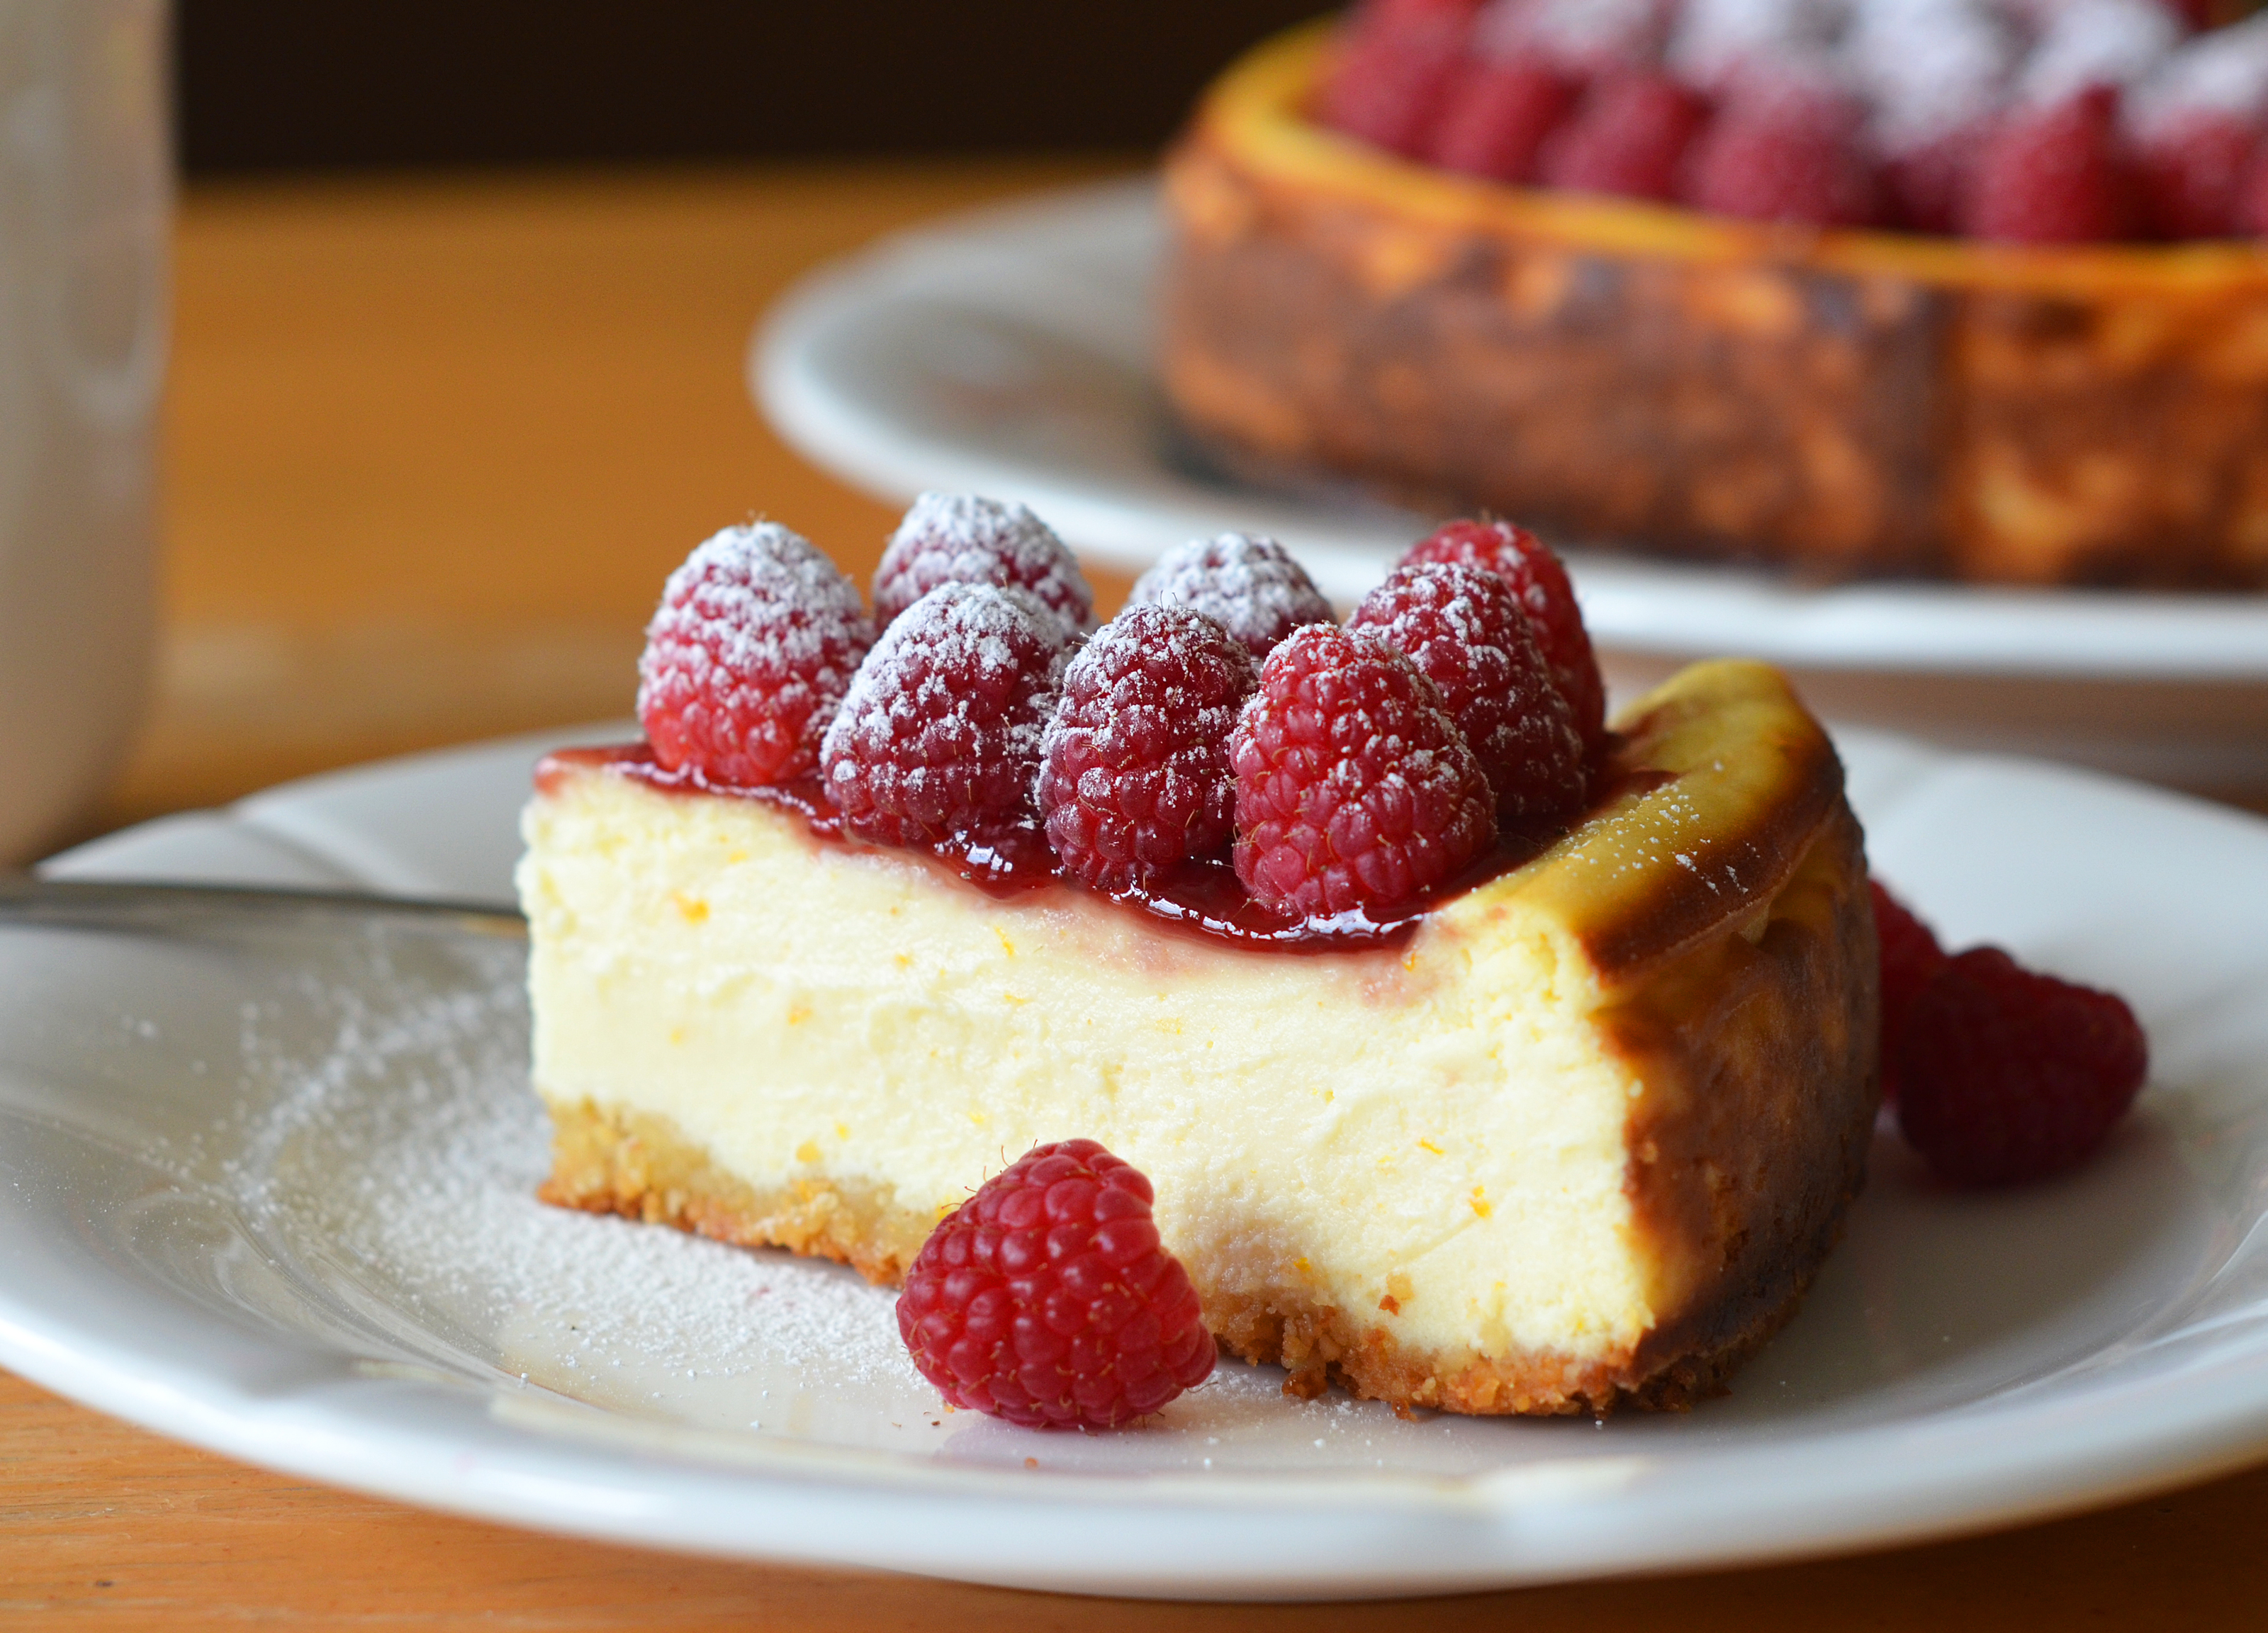 https://www.onceuponachef.com/images/2015/04/ricotta-cheesecake-with-raspberries.jpg